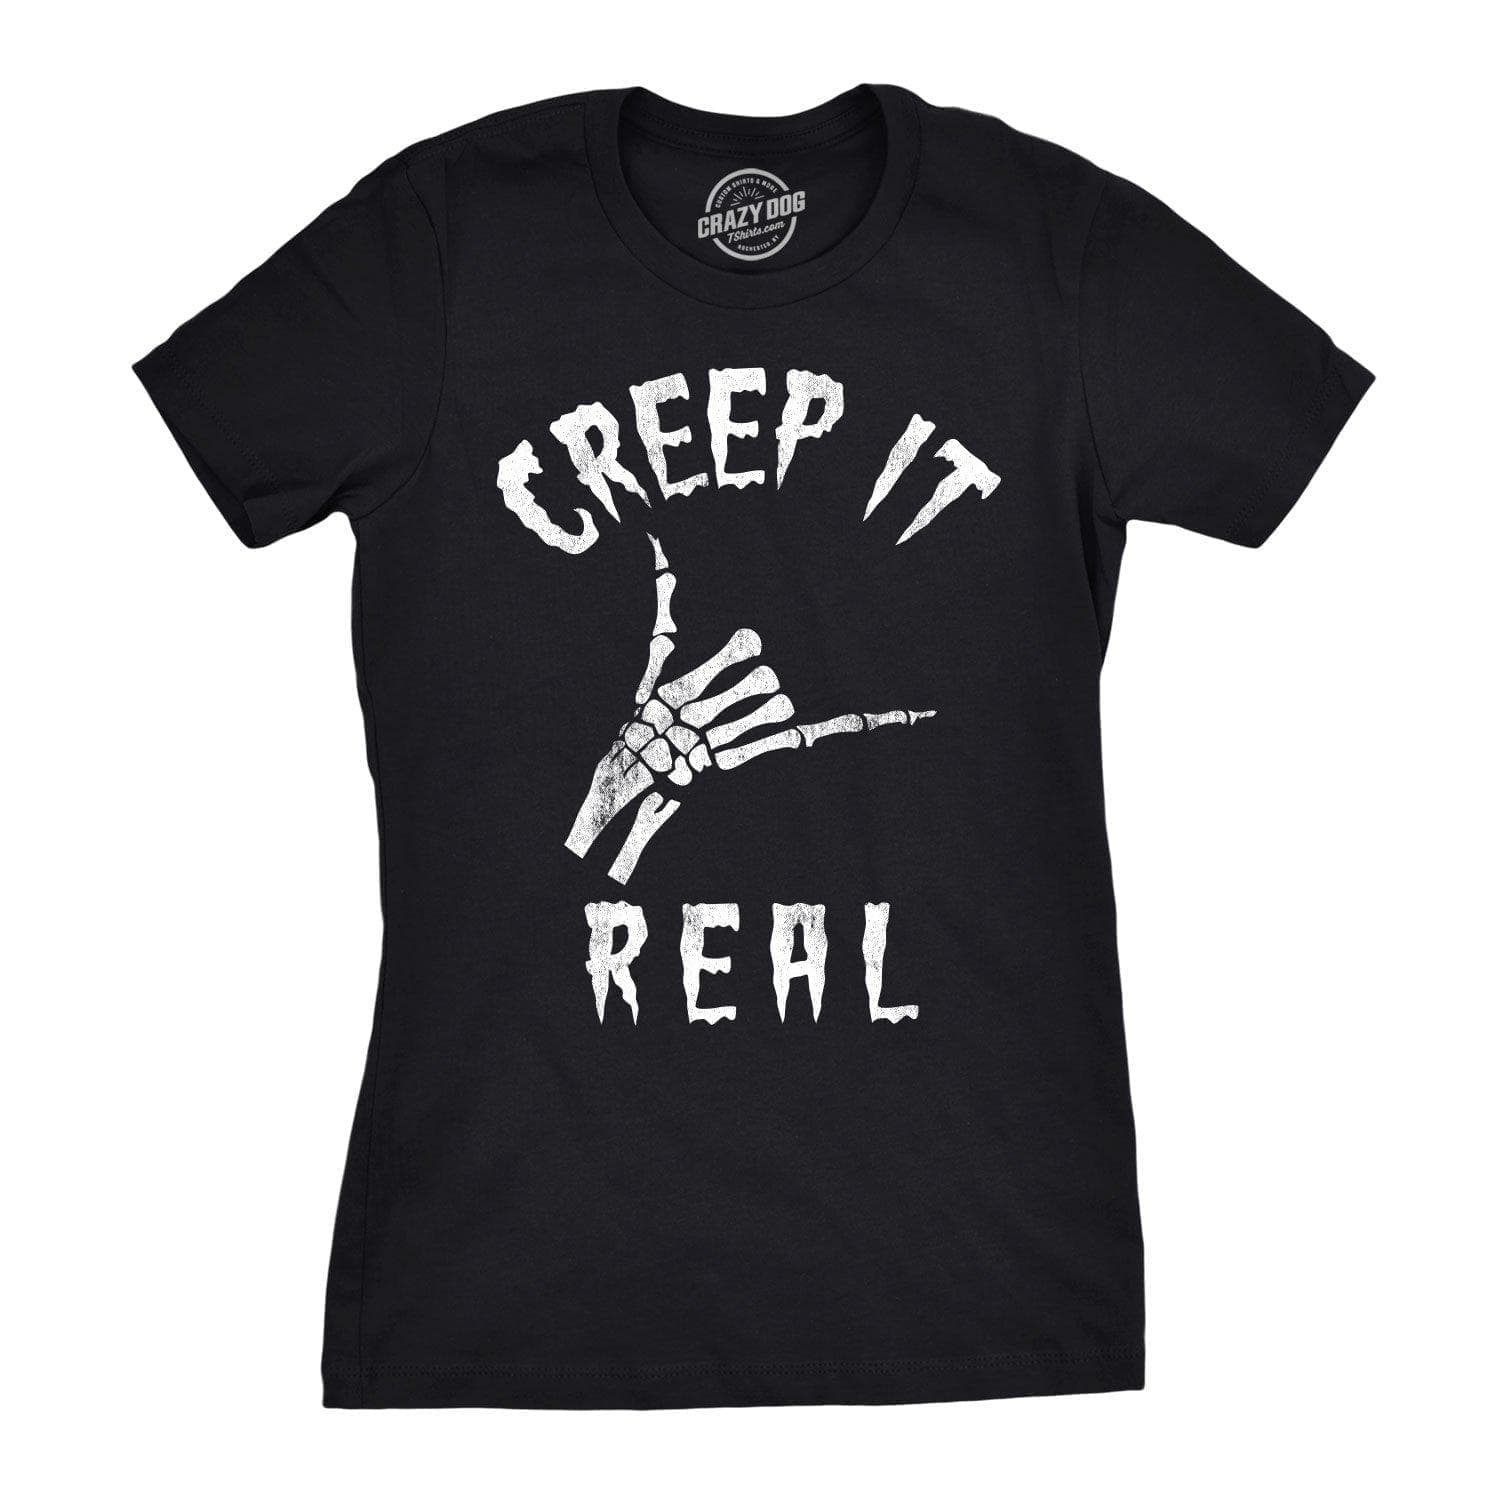 Creep It Real Women's Tshirt - Crazy Dog T-Shirts